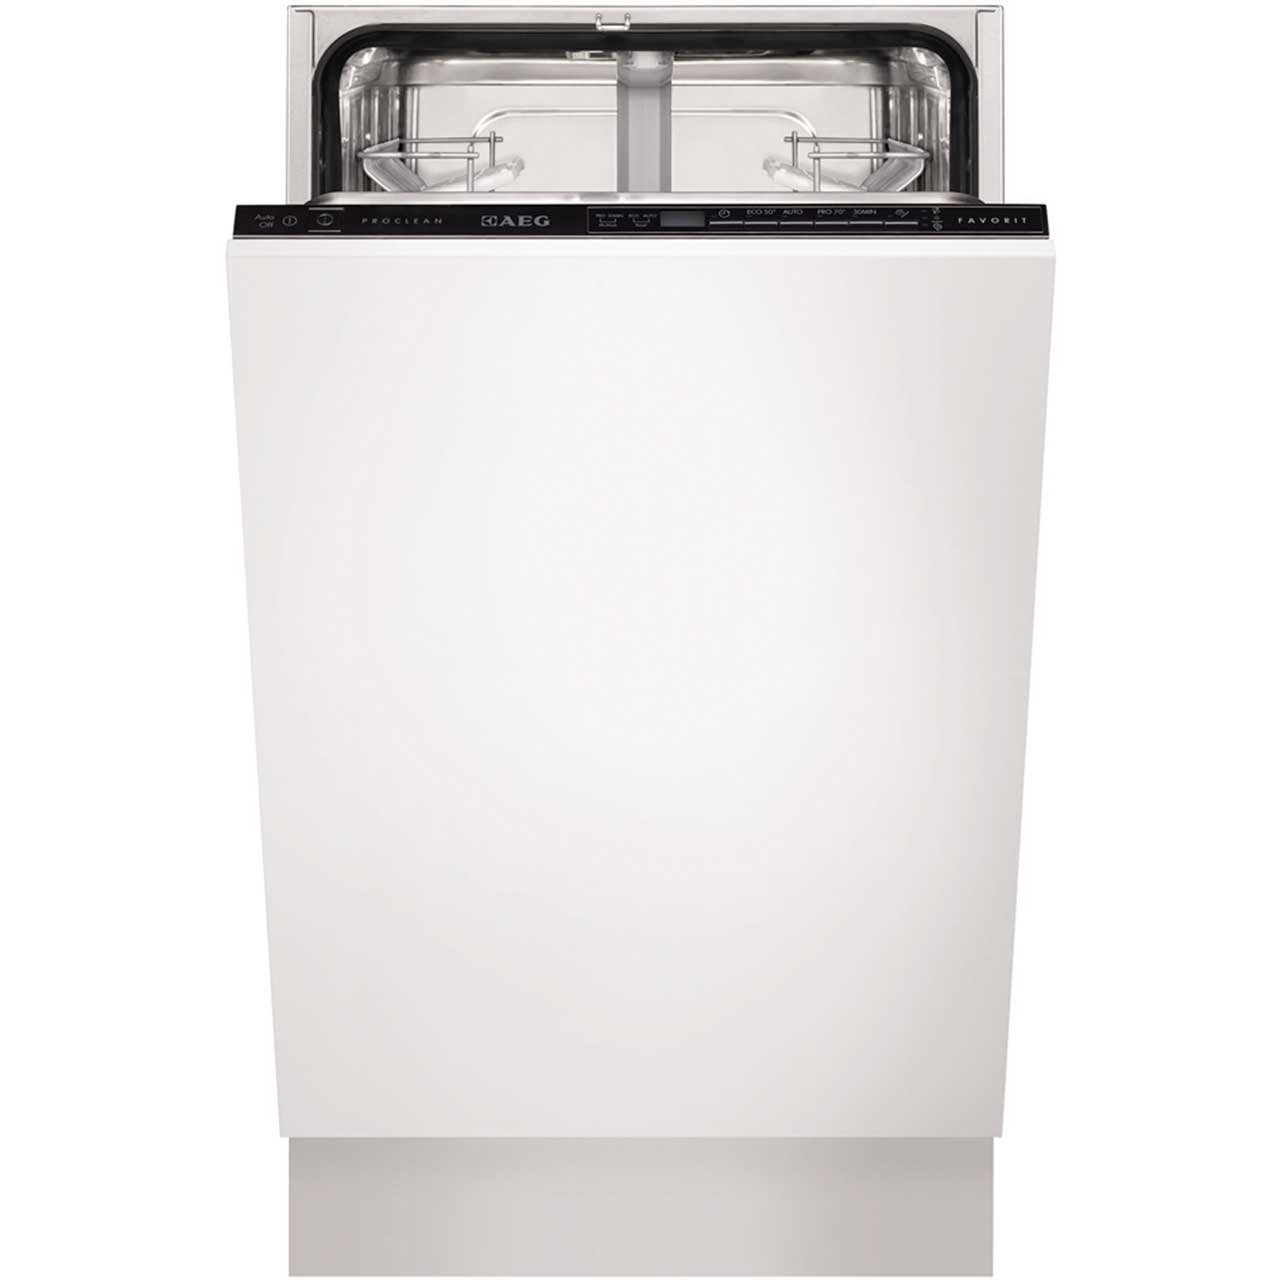 AEG Favorit F55412VI0 Integrated Slimline Dishwasher in White